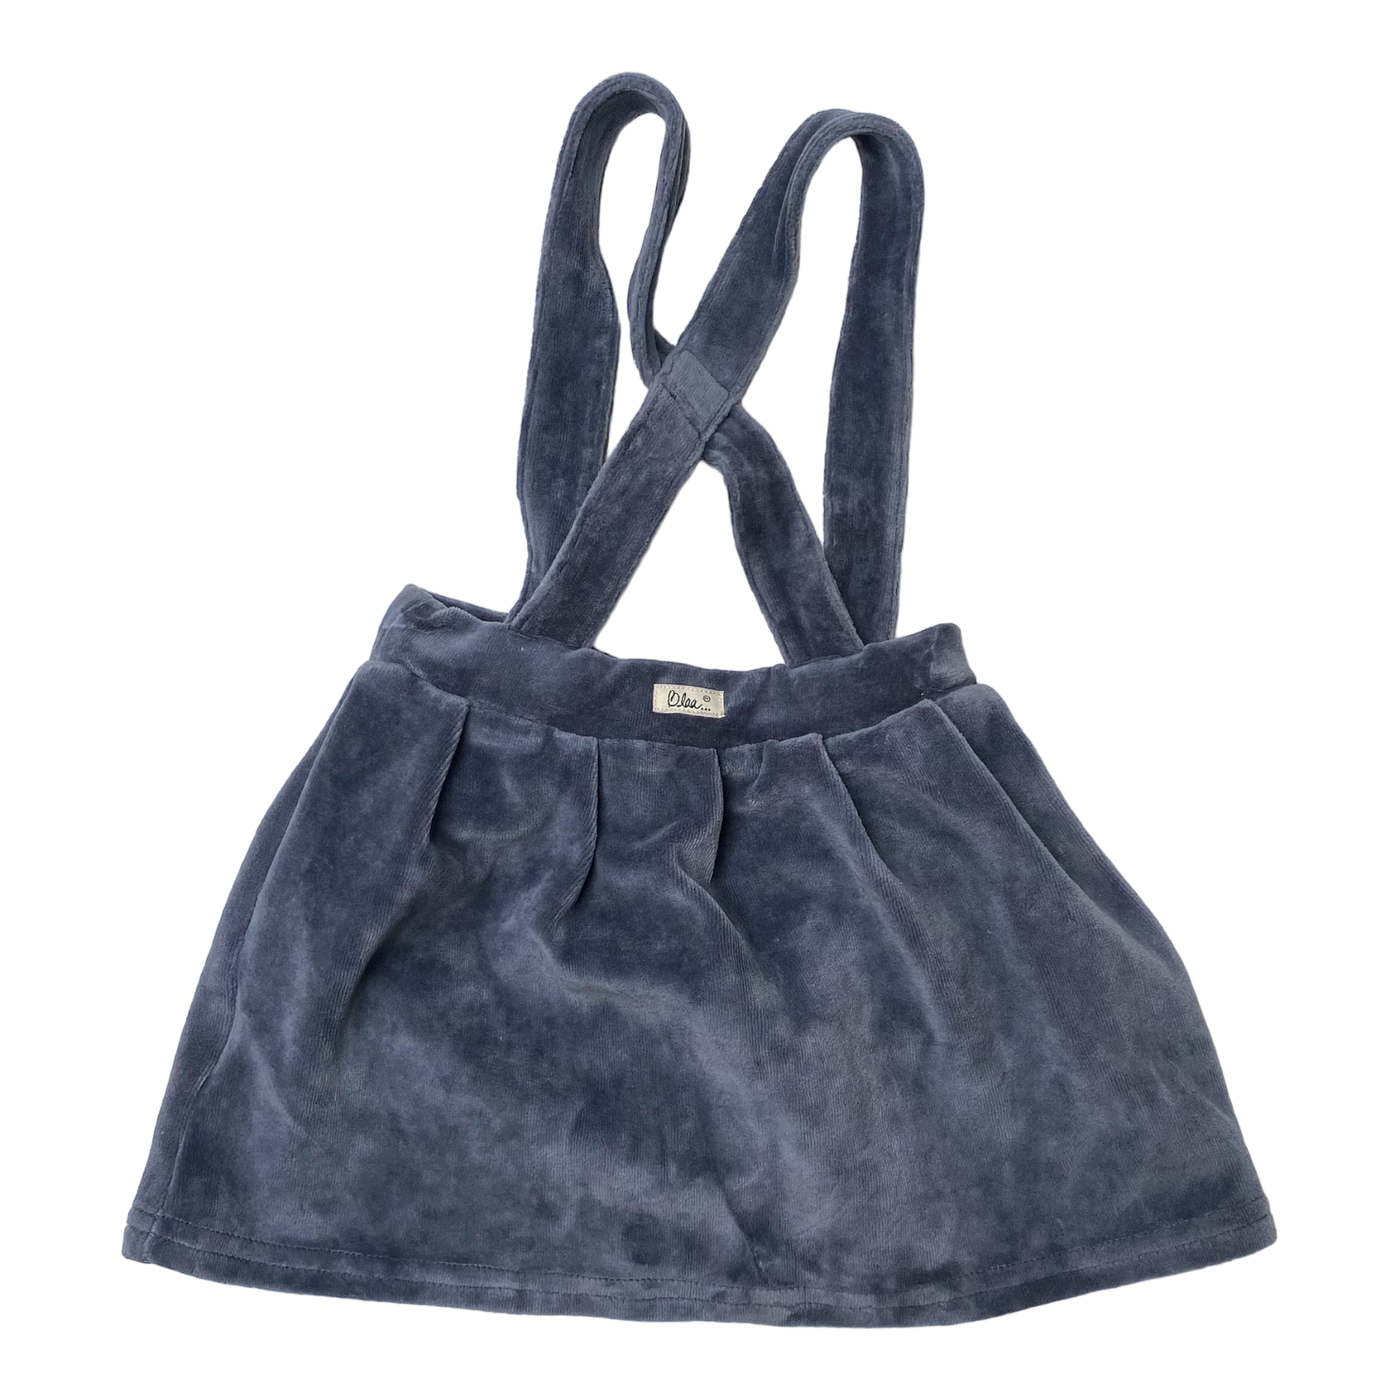 Blaa dungaree velour skirt, stone grey | 74/80cm